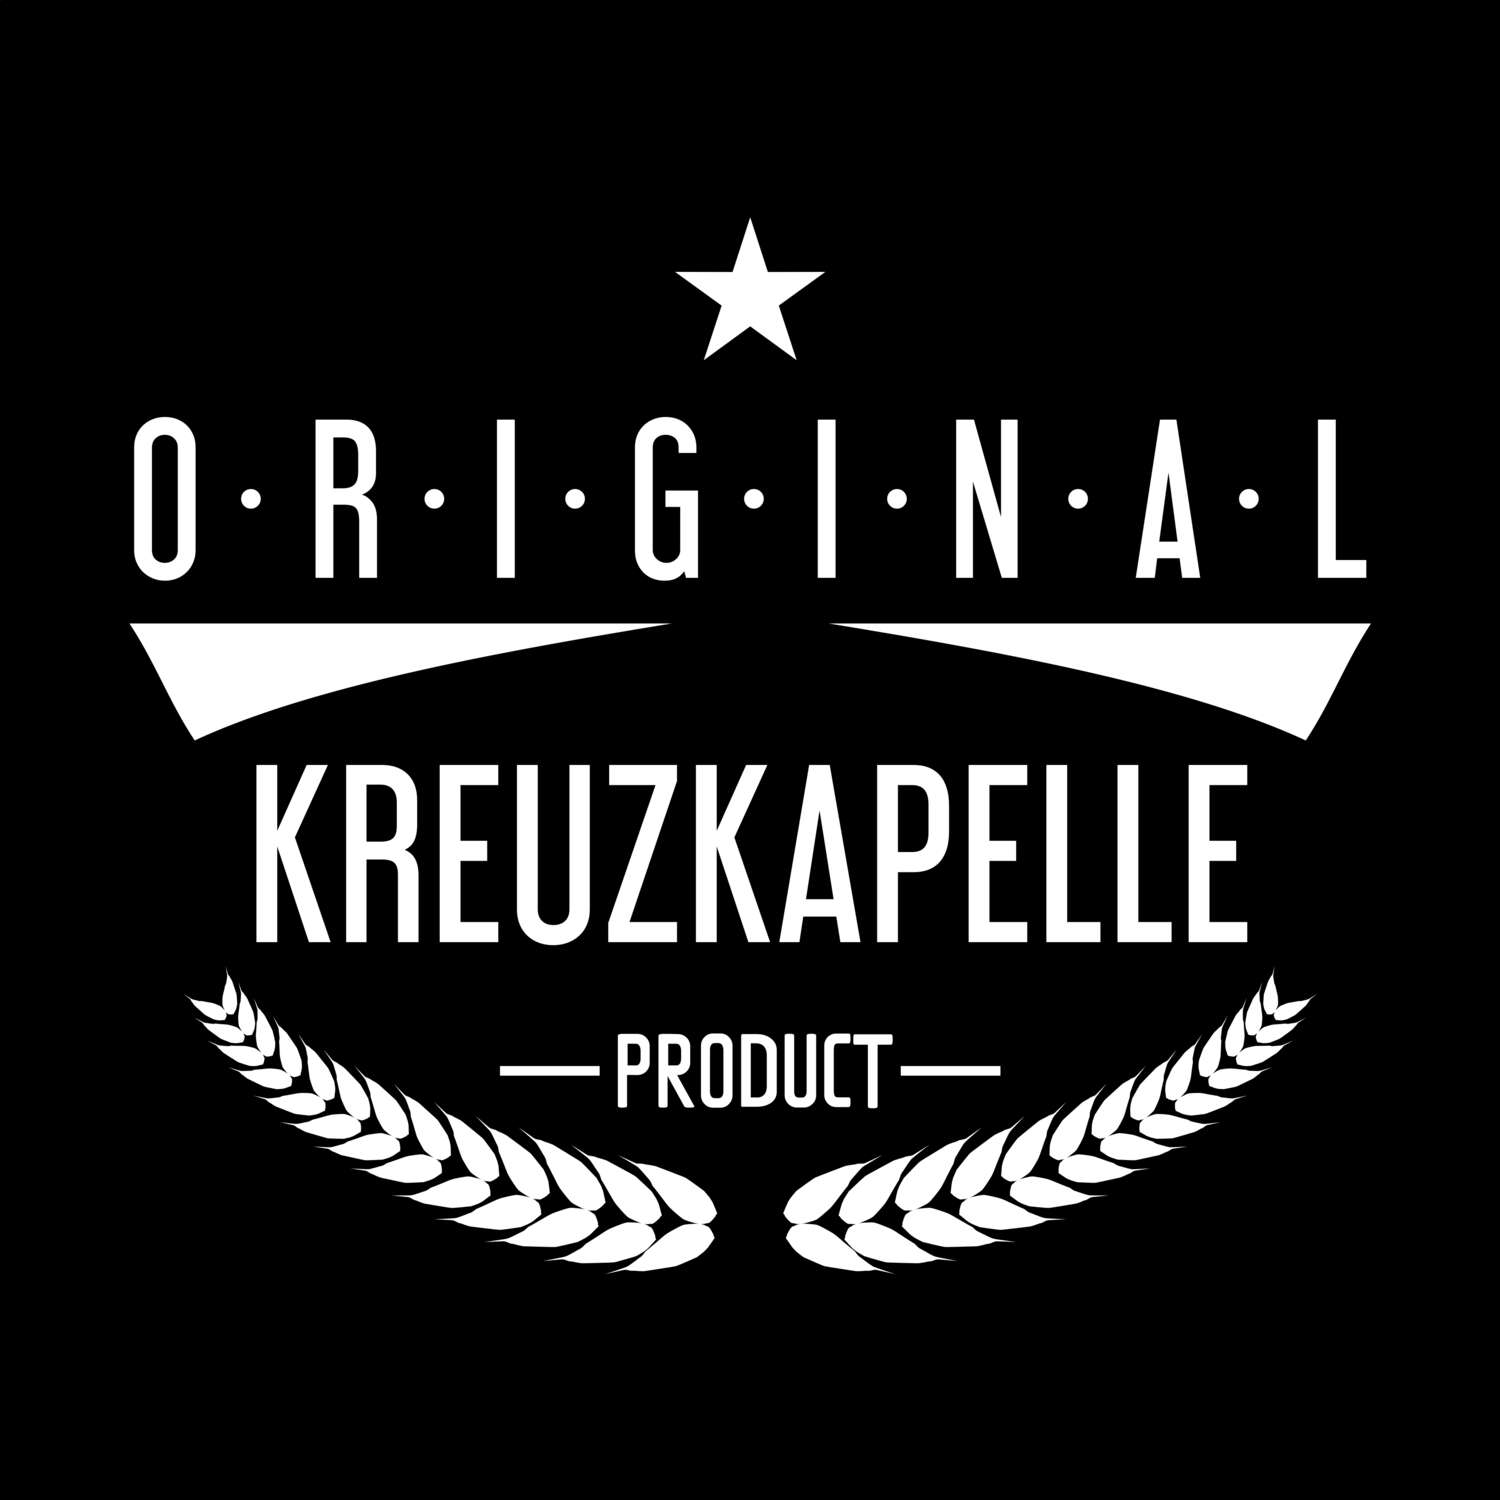 Kreuzkapelle T-Shirt »Original Product«